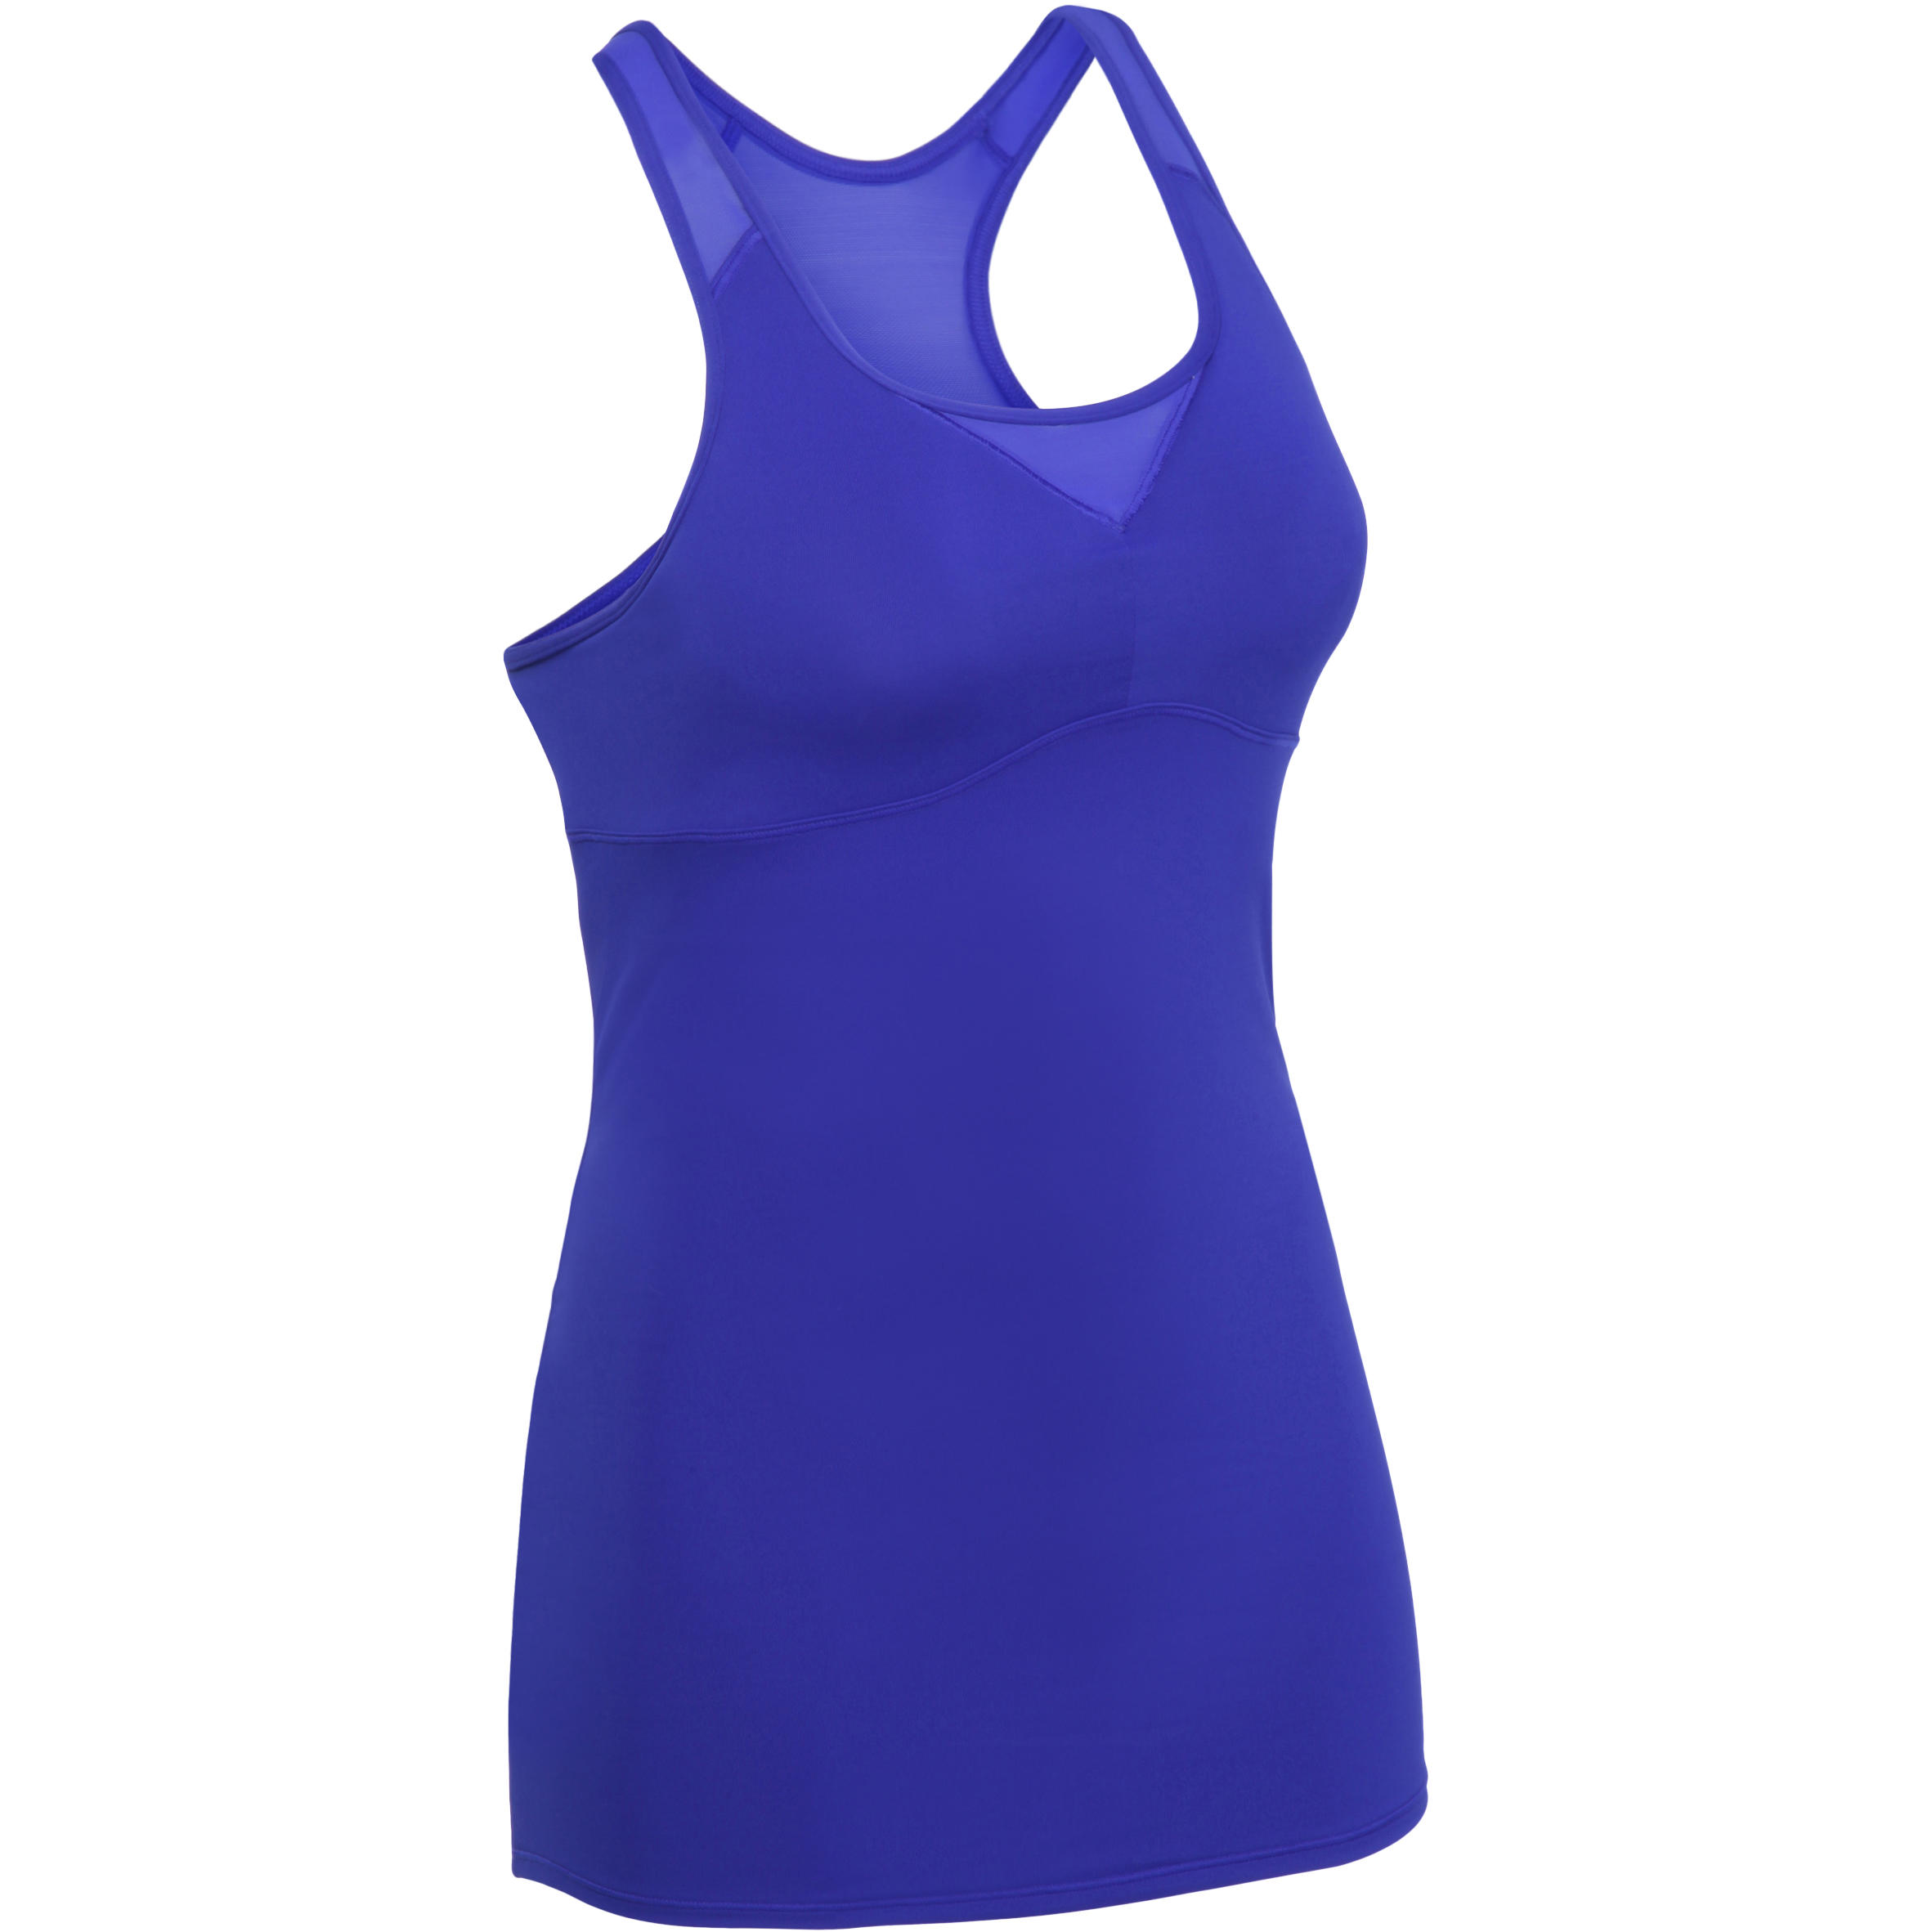 DOMYOS Breathe Women's Fitness Tank Top with Built-in Bra Tank Top - Dark Blue